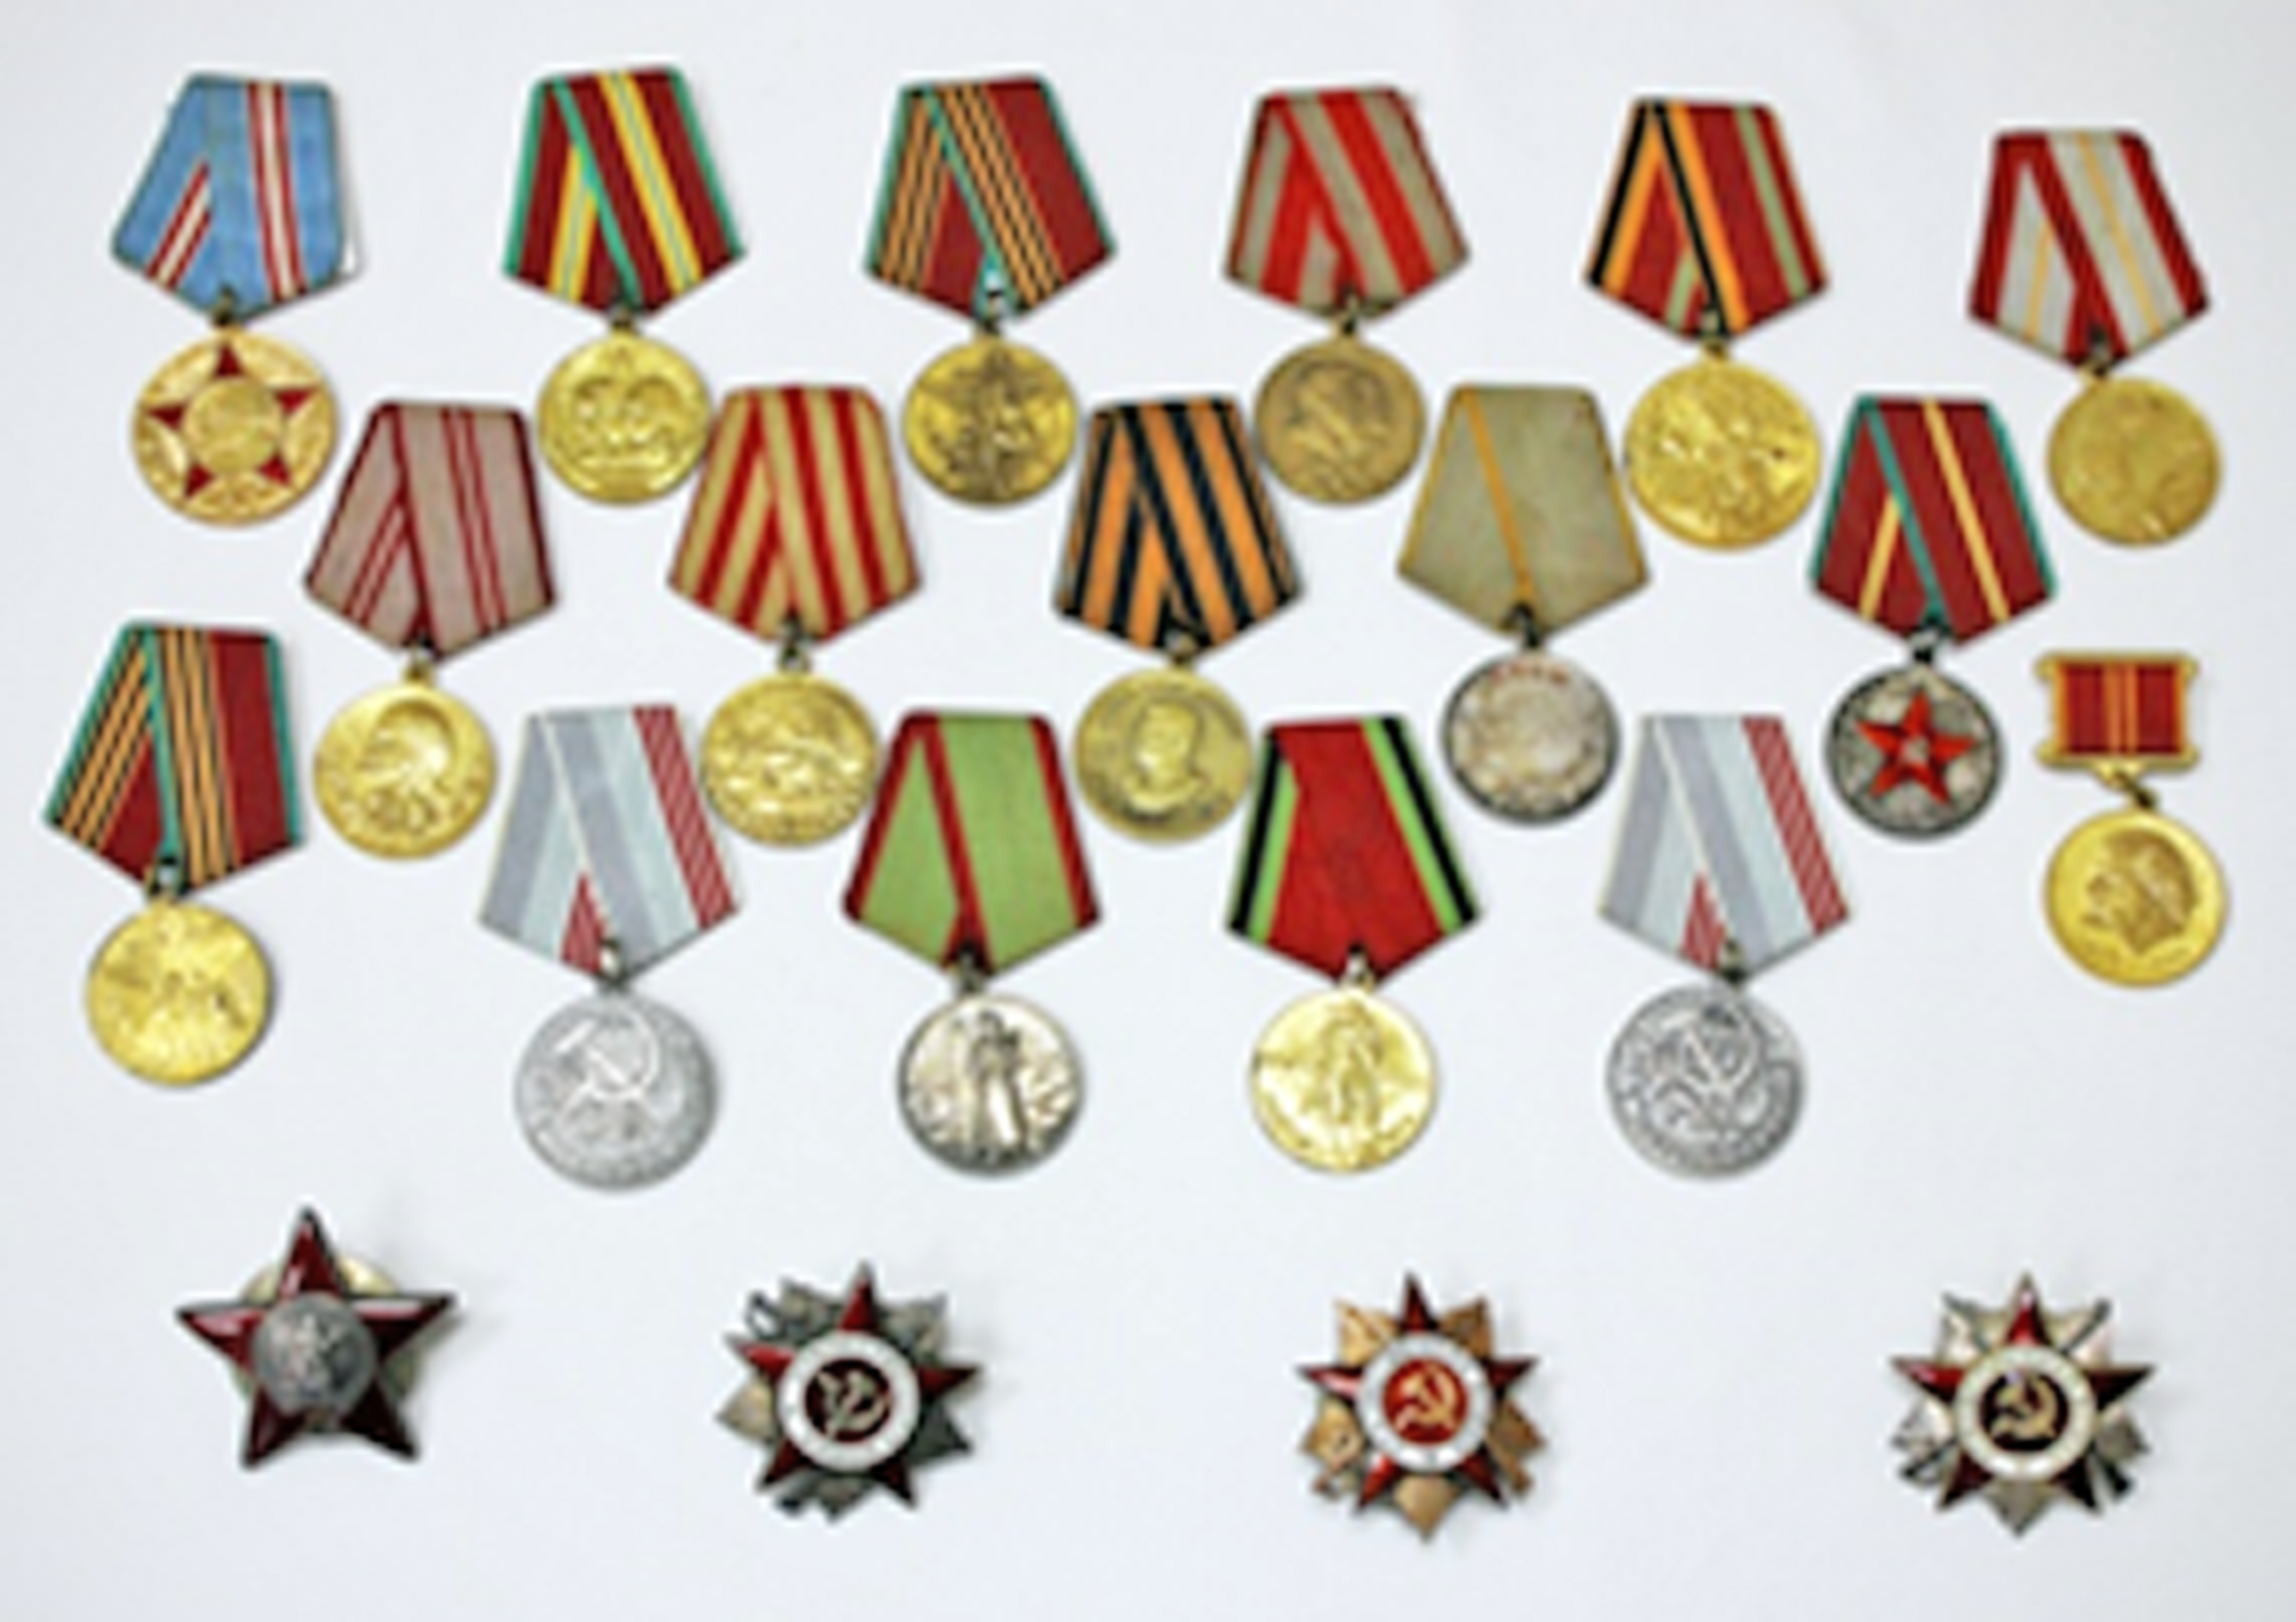 Медали и ордена вов фото и название